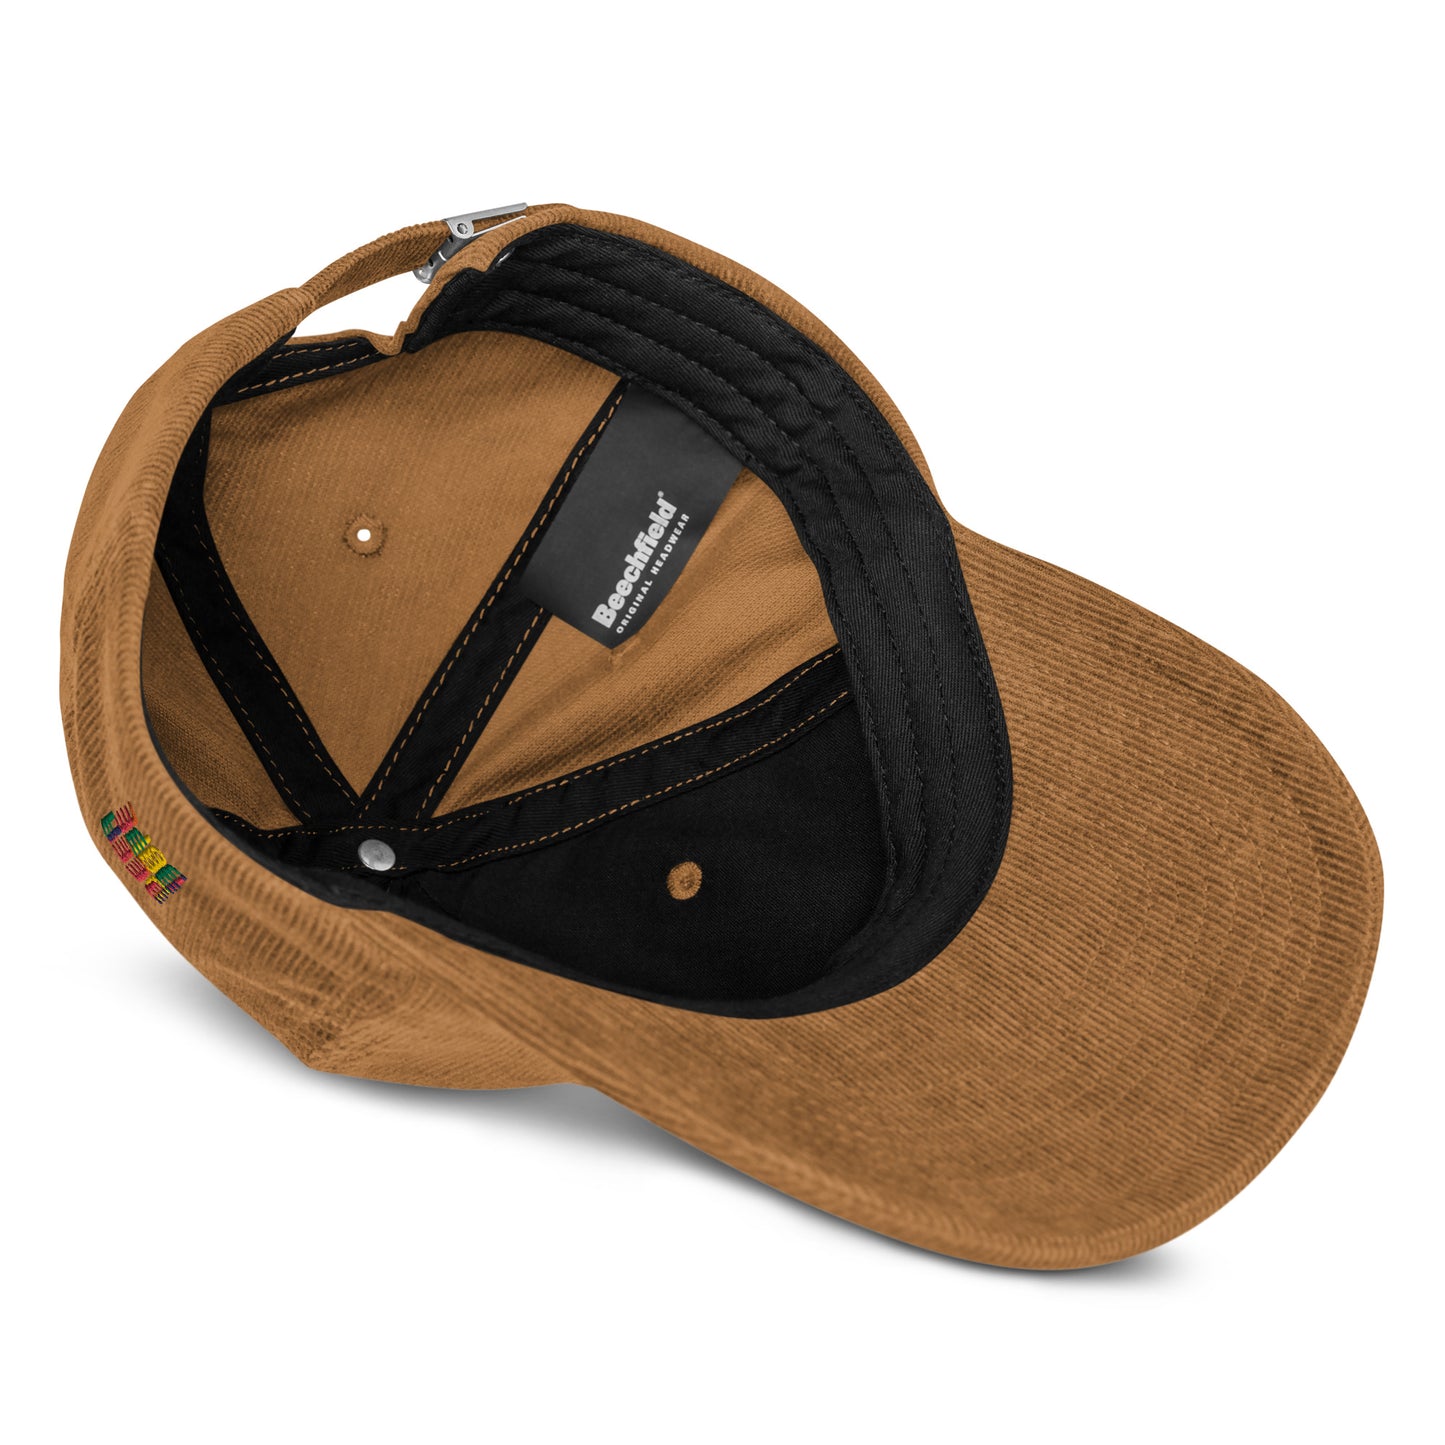 Hillside 96' Corduroy hat